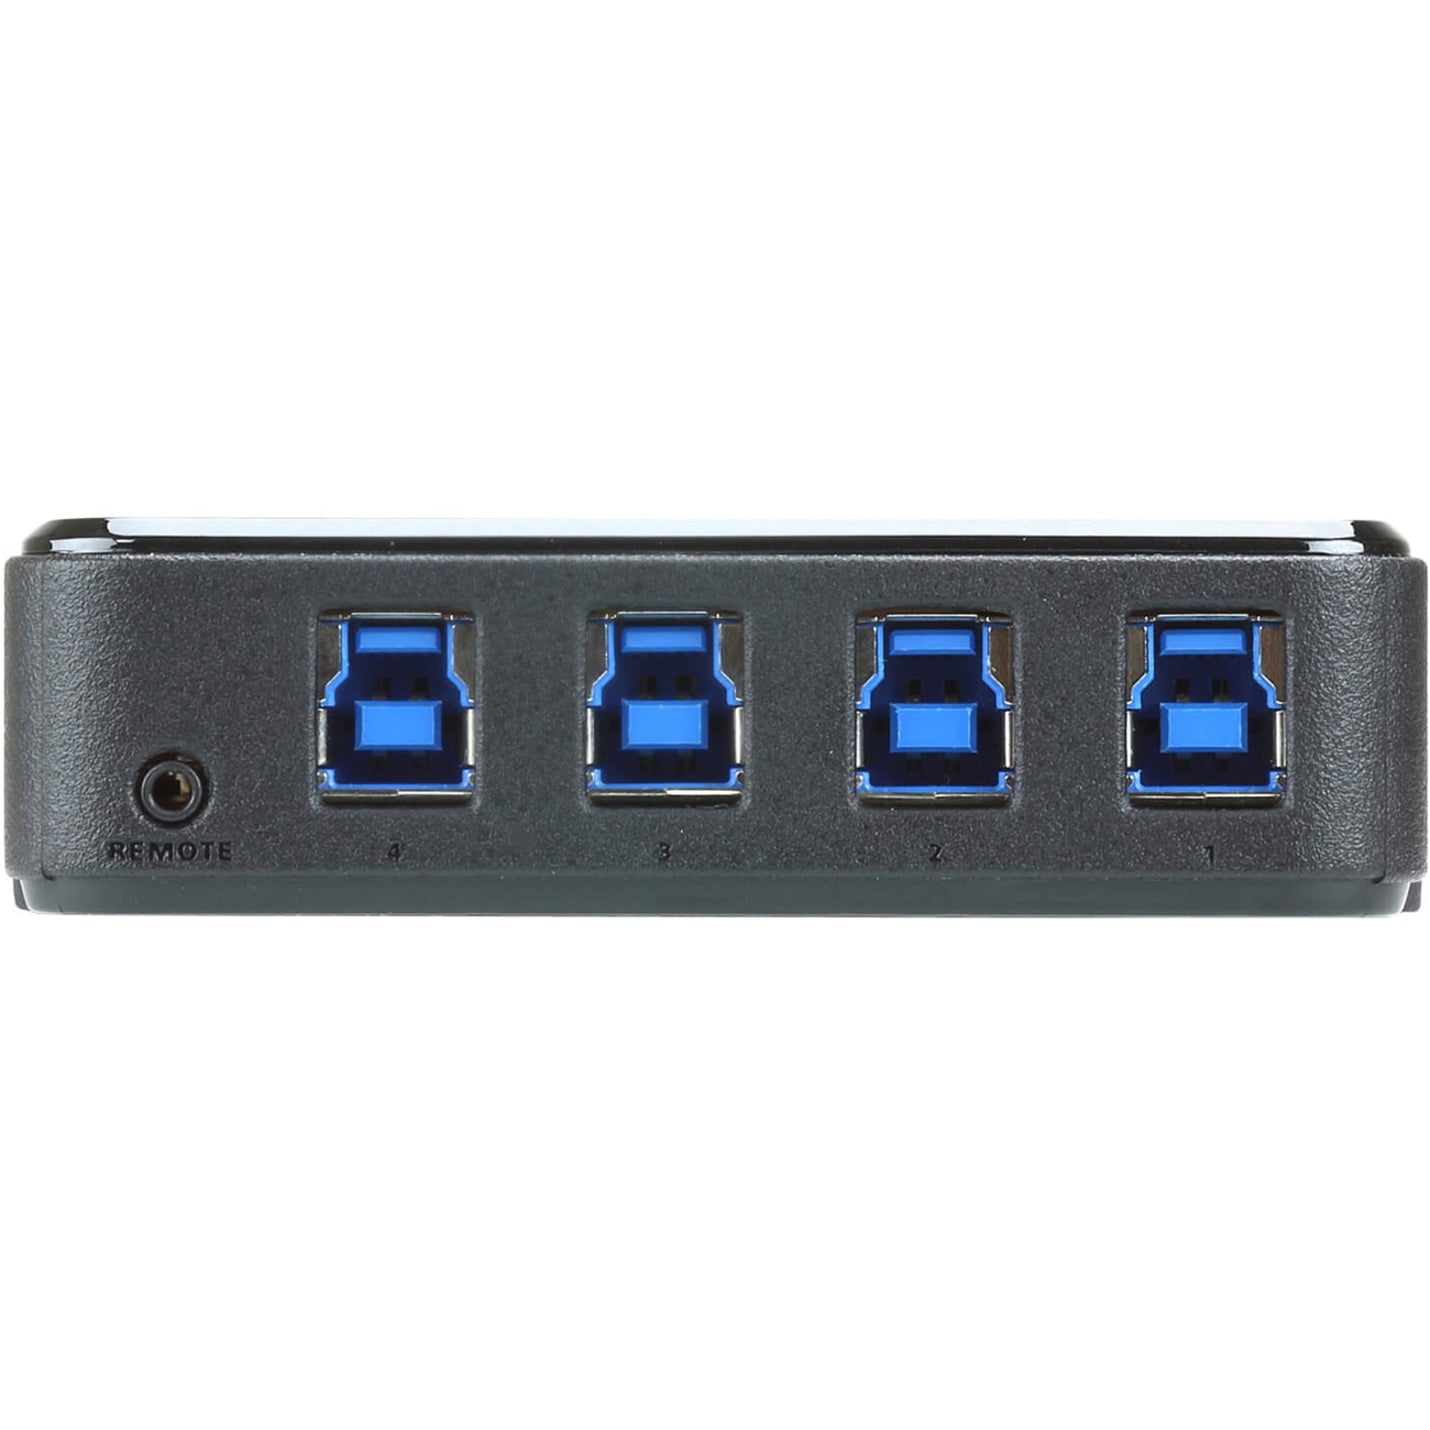 ATEN US3344 4 x 4 USB 3.2 Gen1 Peripheral Sharing Switch, 8 USB Ports, USB 3.2 Gen 1 Type-B Interface